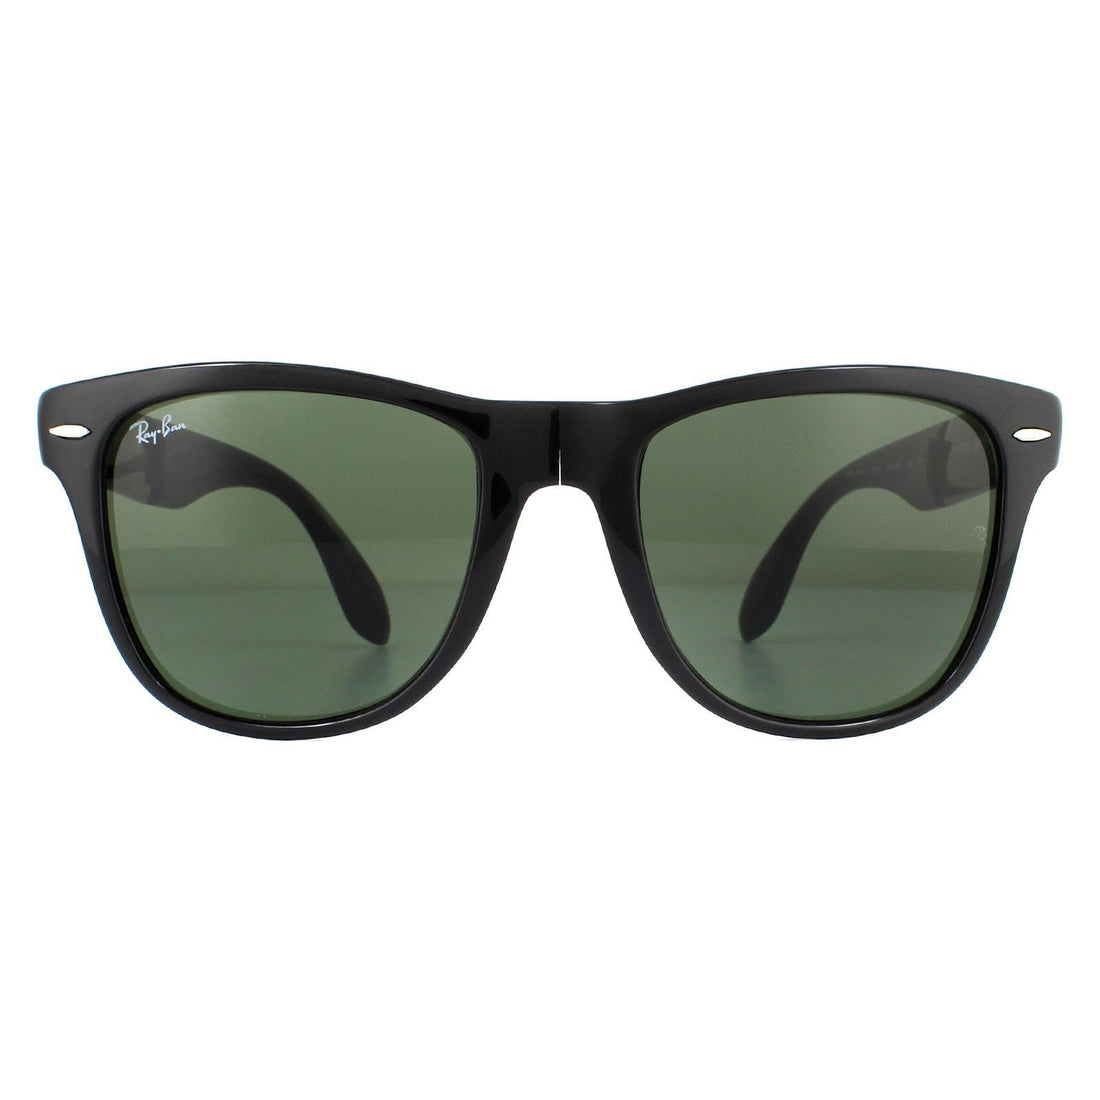 Ray-Ban Folding Wayfarer RB4105 Sunglasses Black Green 50